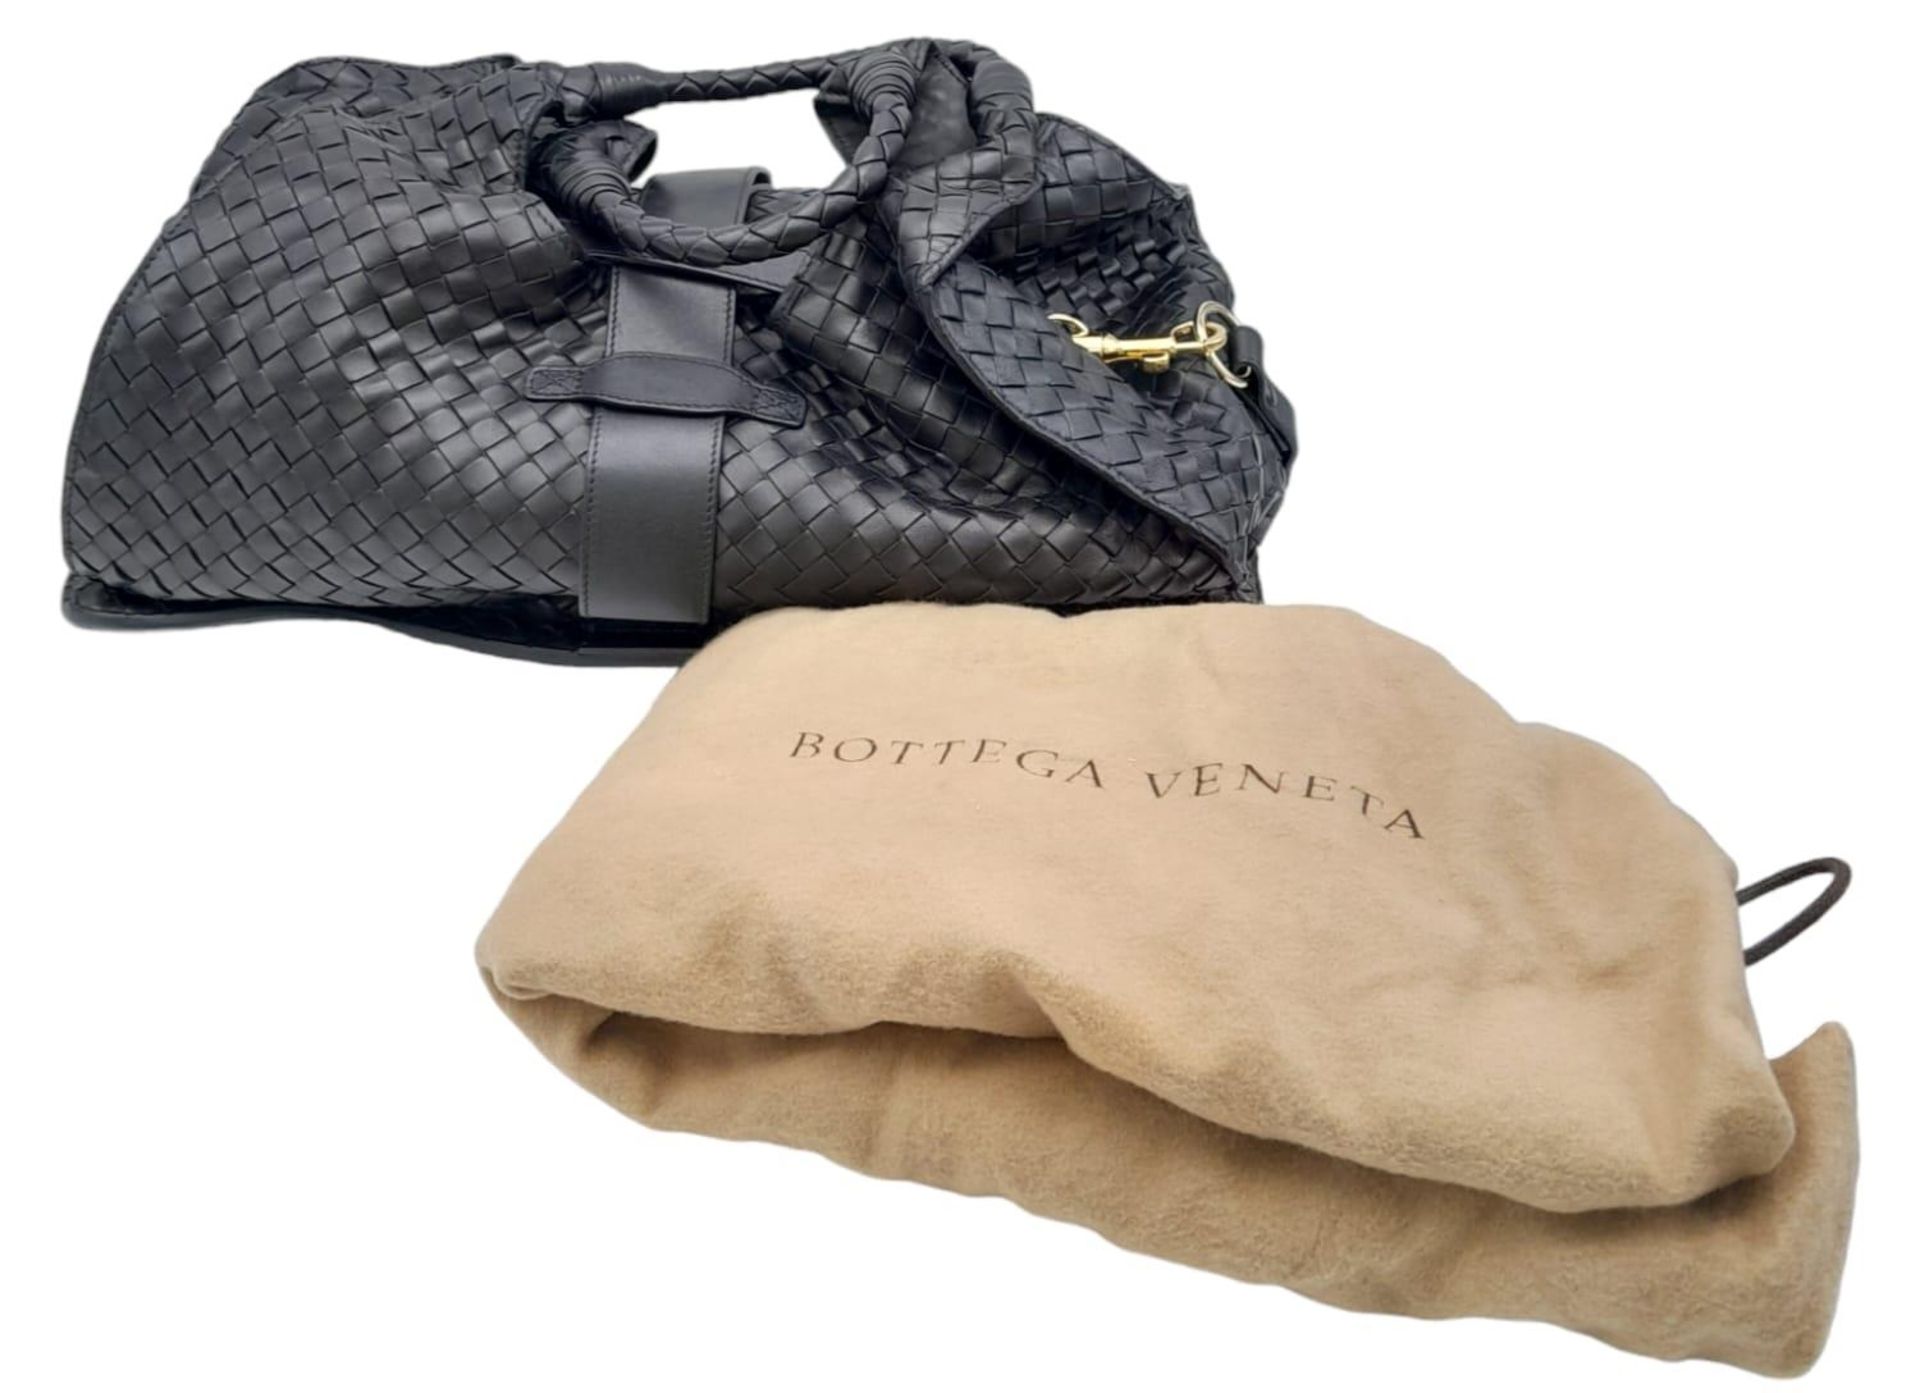 A Bottega Veneta Black Shoulder Bag. Intrecciato leather exterior with gold-toned hardware, two